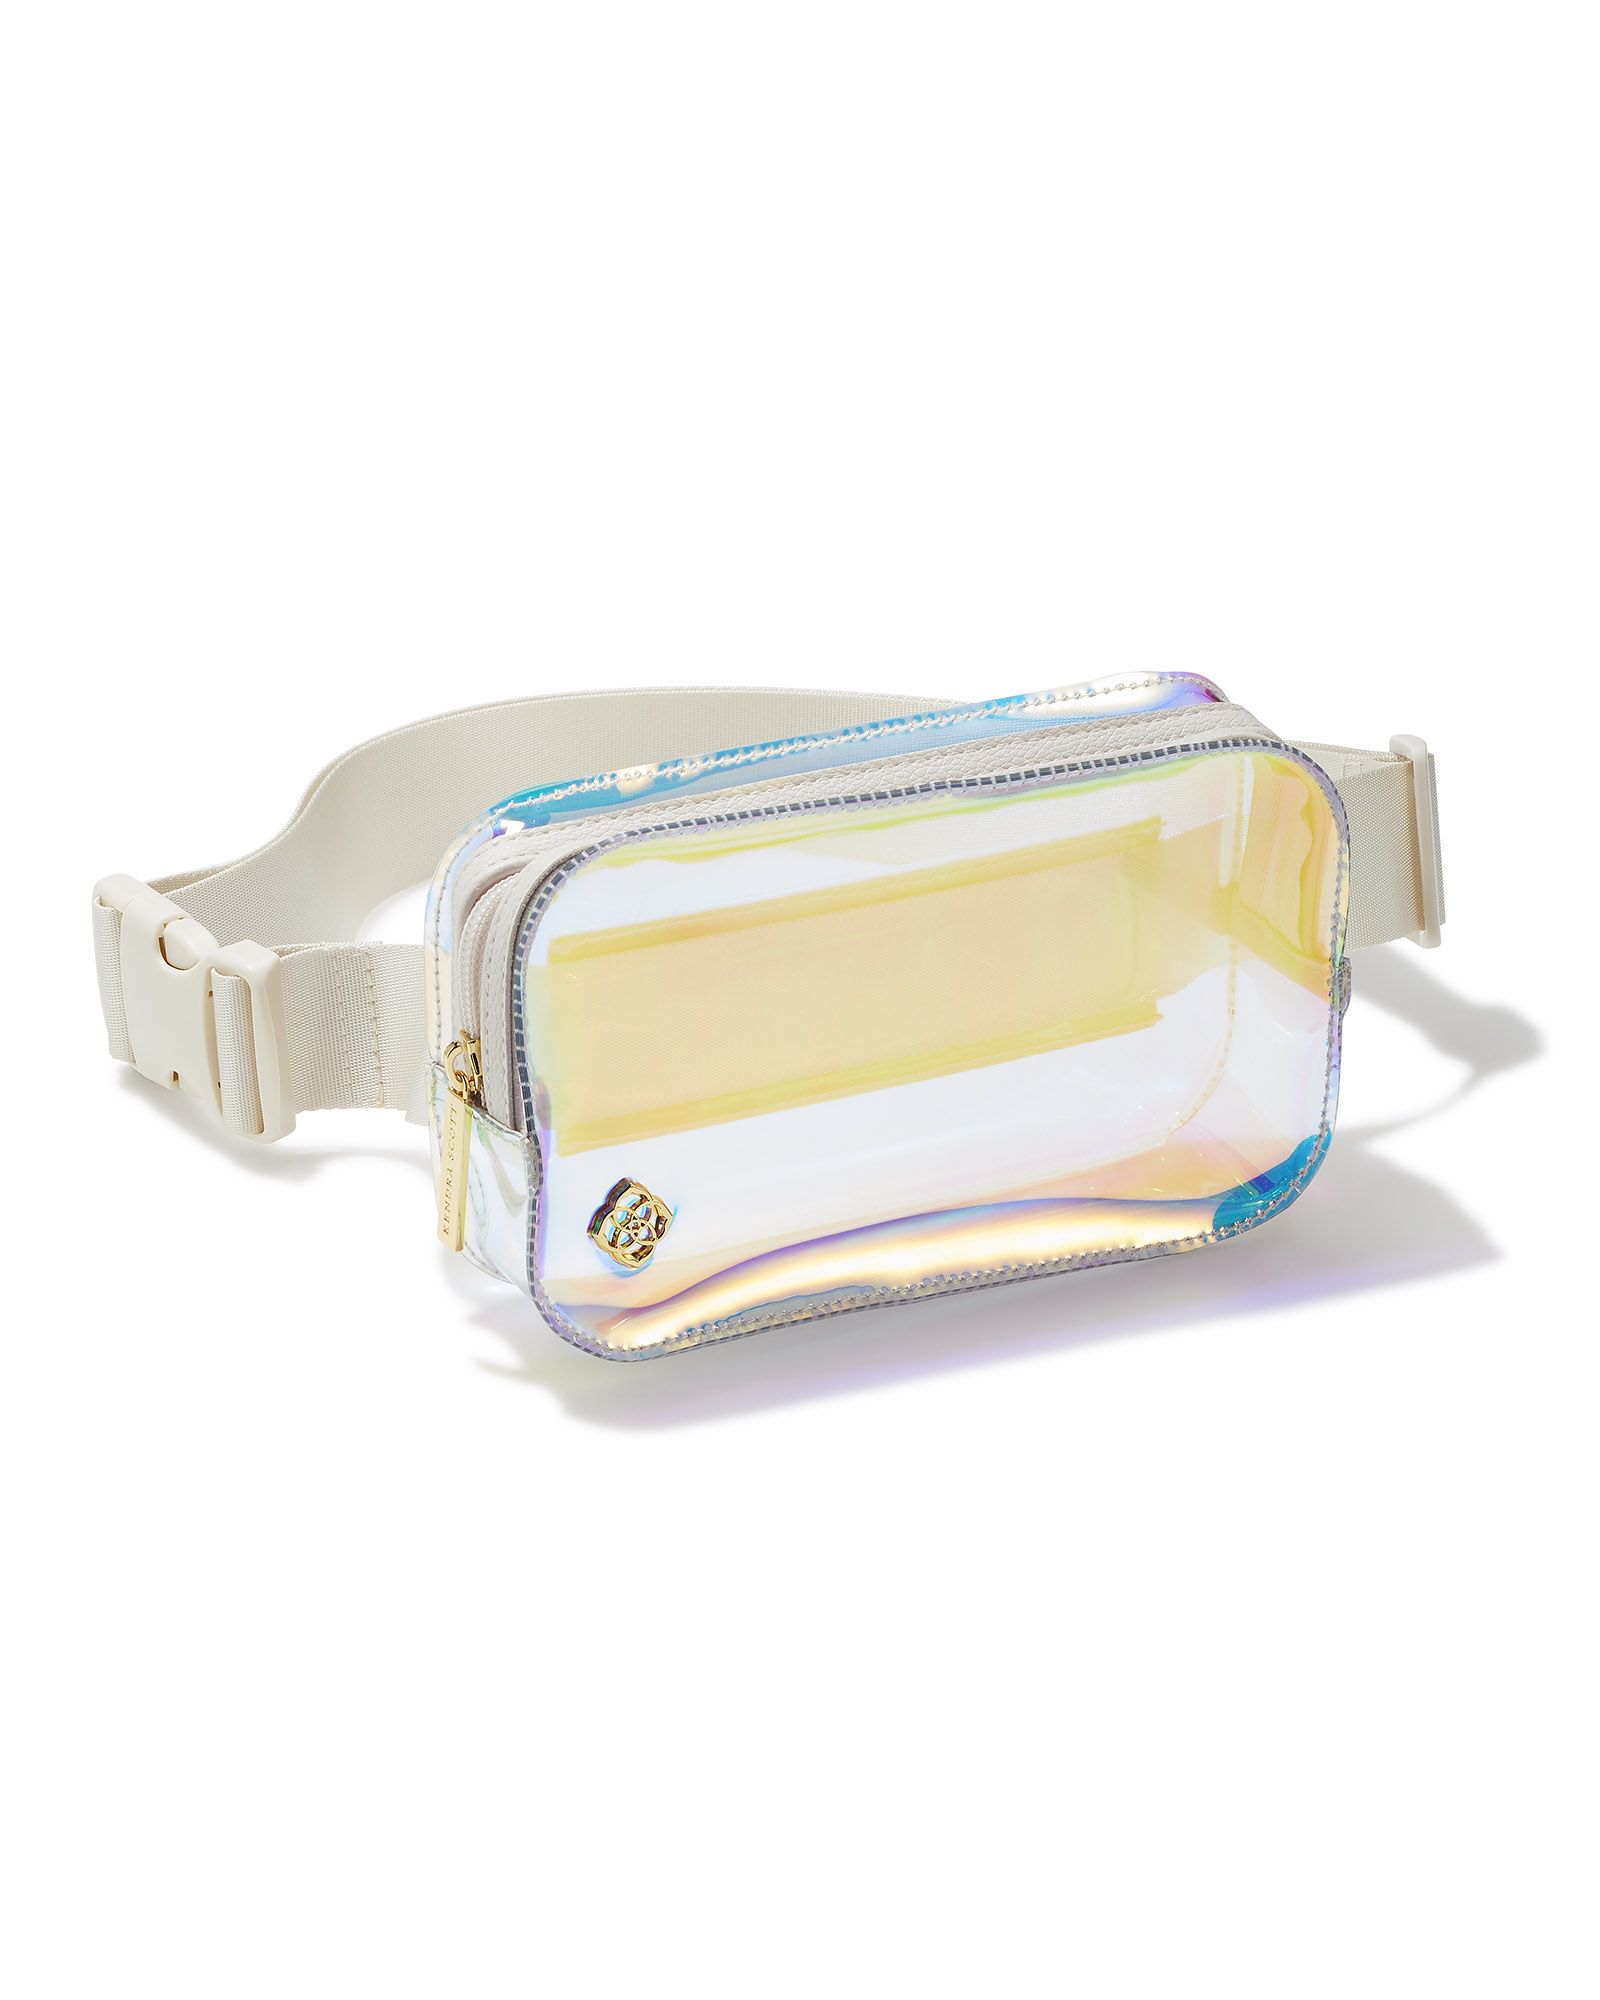 Clear Belt Bag in Clear Iridescent | Kendra Scott | Kendra Scott